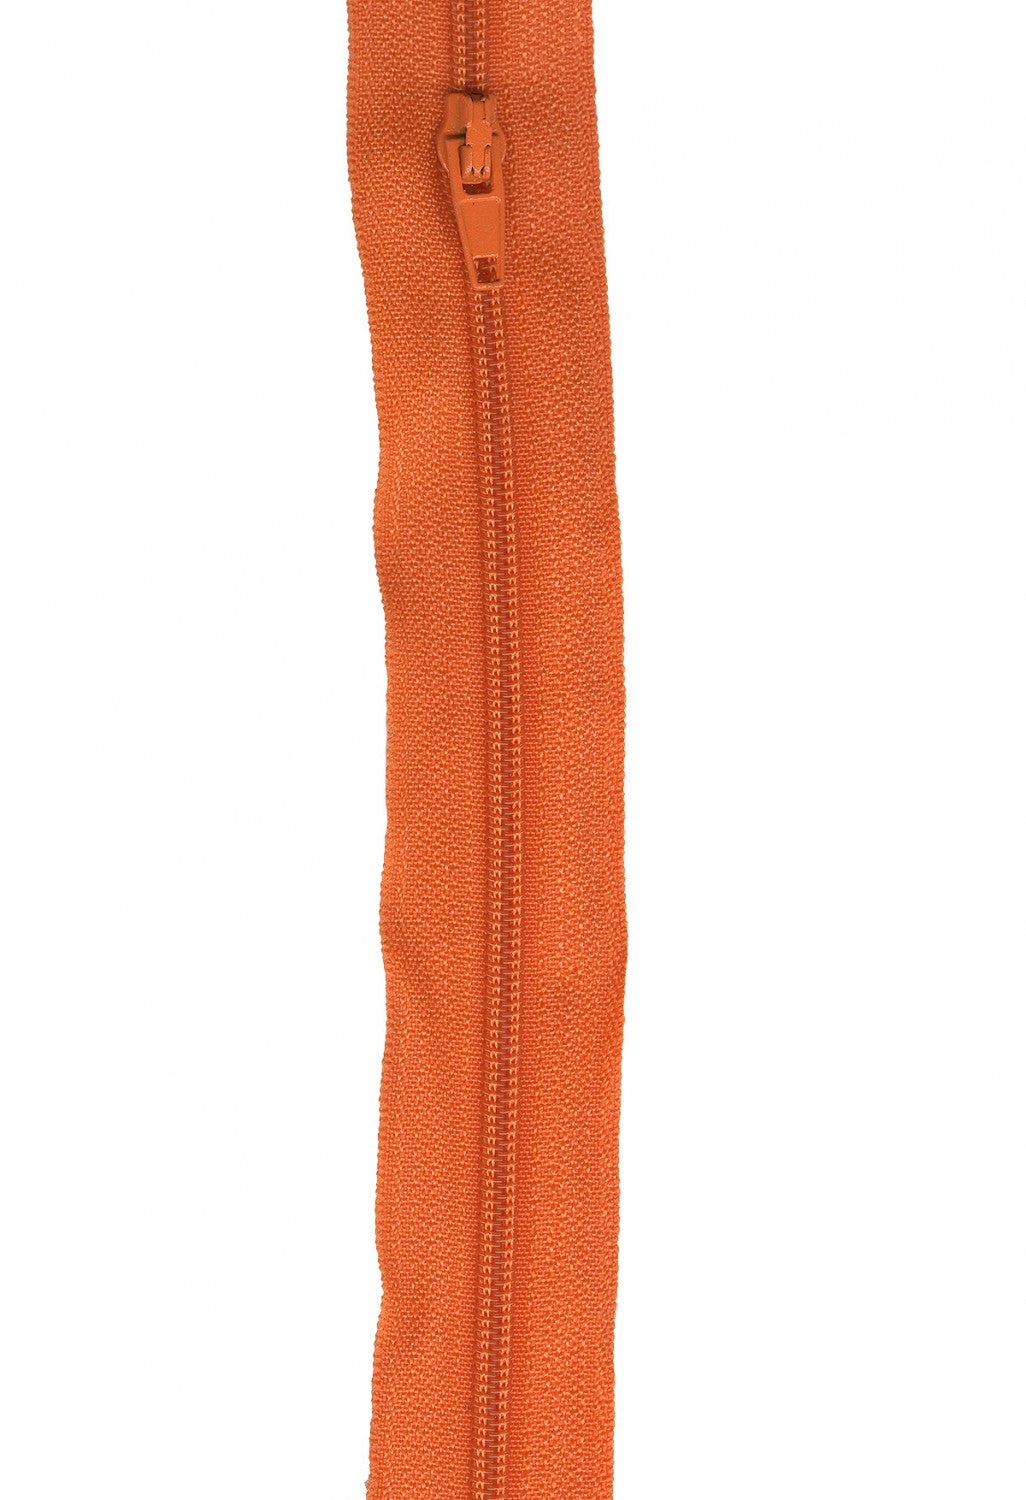 Dragkedja orange 4 mm x 5 meter m/12 lås (5.5 yard)